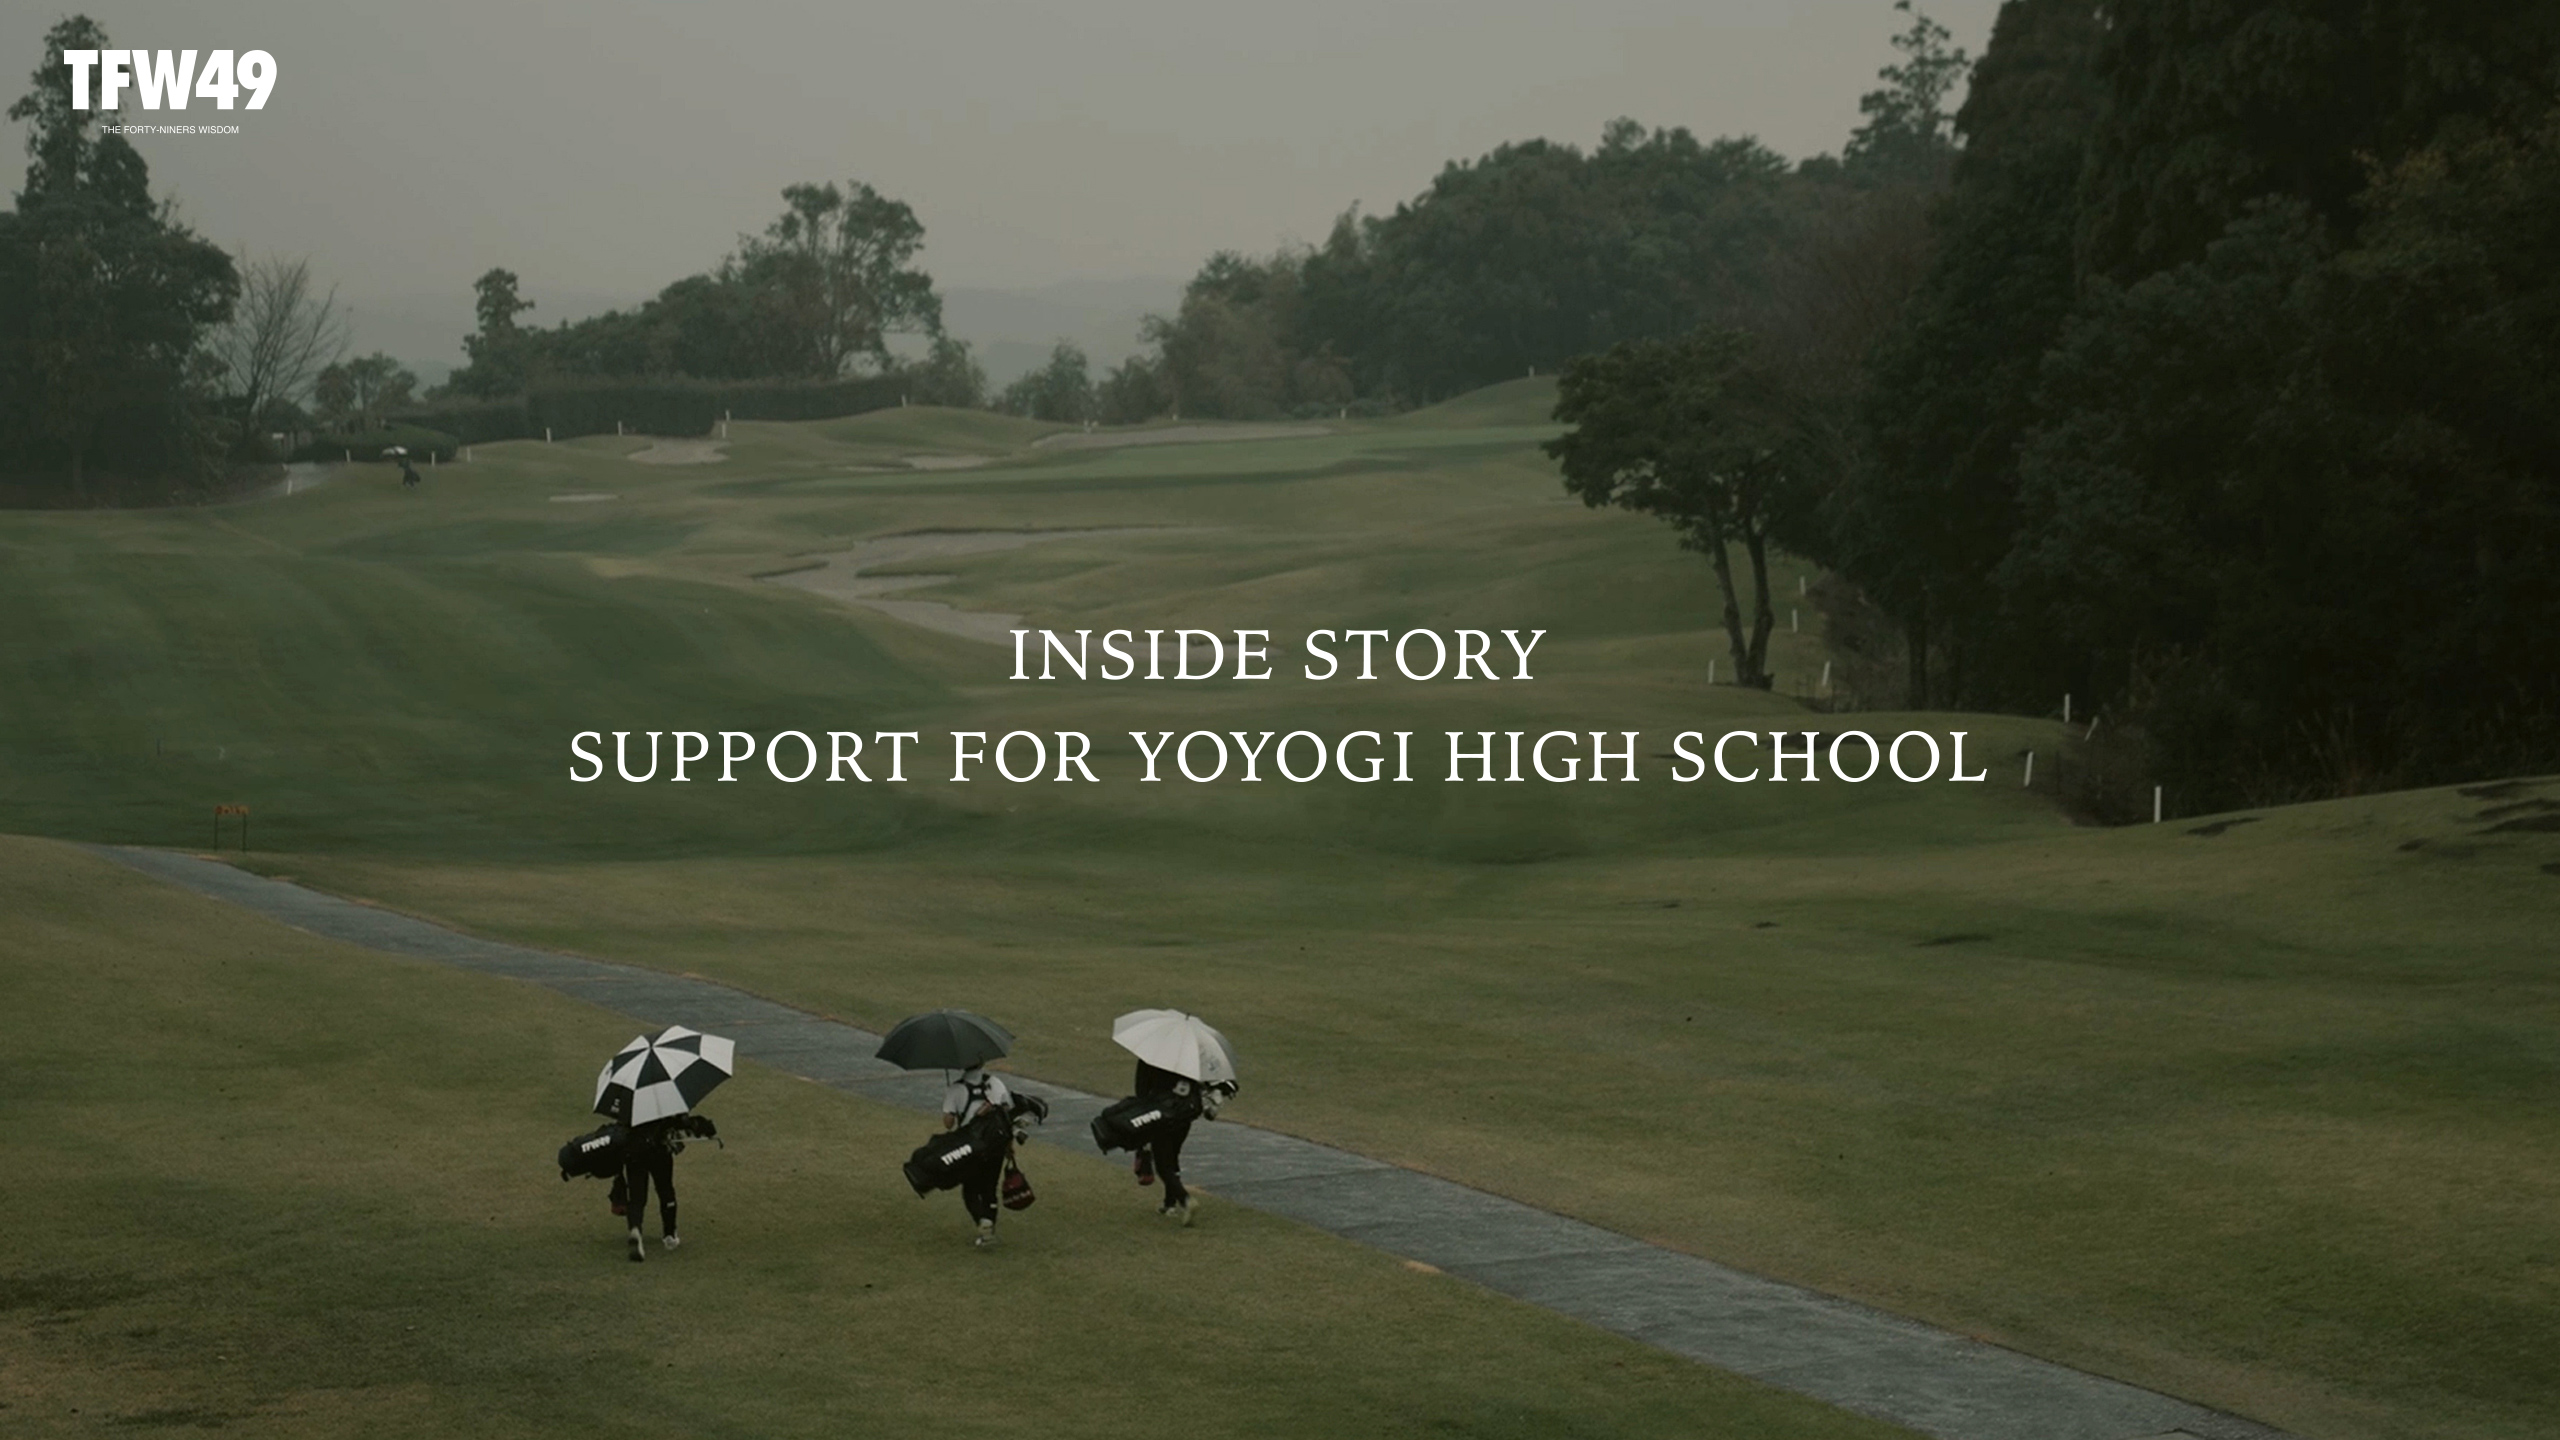 School Xxxgirl - INSIDE STORY SUPPORT FOR YOYOGI HIGH SCHOOL | TFW49ï¼ˆãƒ†ã‚£ãƒ¼ã‚¨ãƒ•ãƒ€ãƒ–ãƒªãƒ¥ãƒ¼ï¼‰å…¬å¼ã‚µã‚¤ãƒˆ